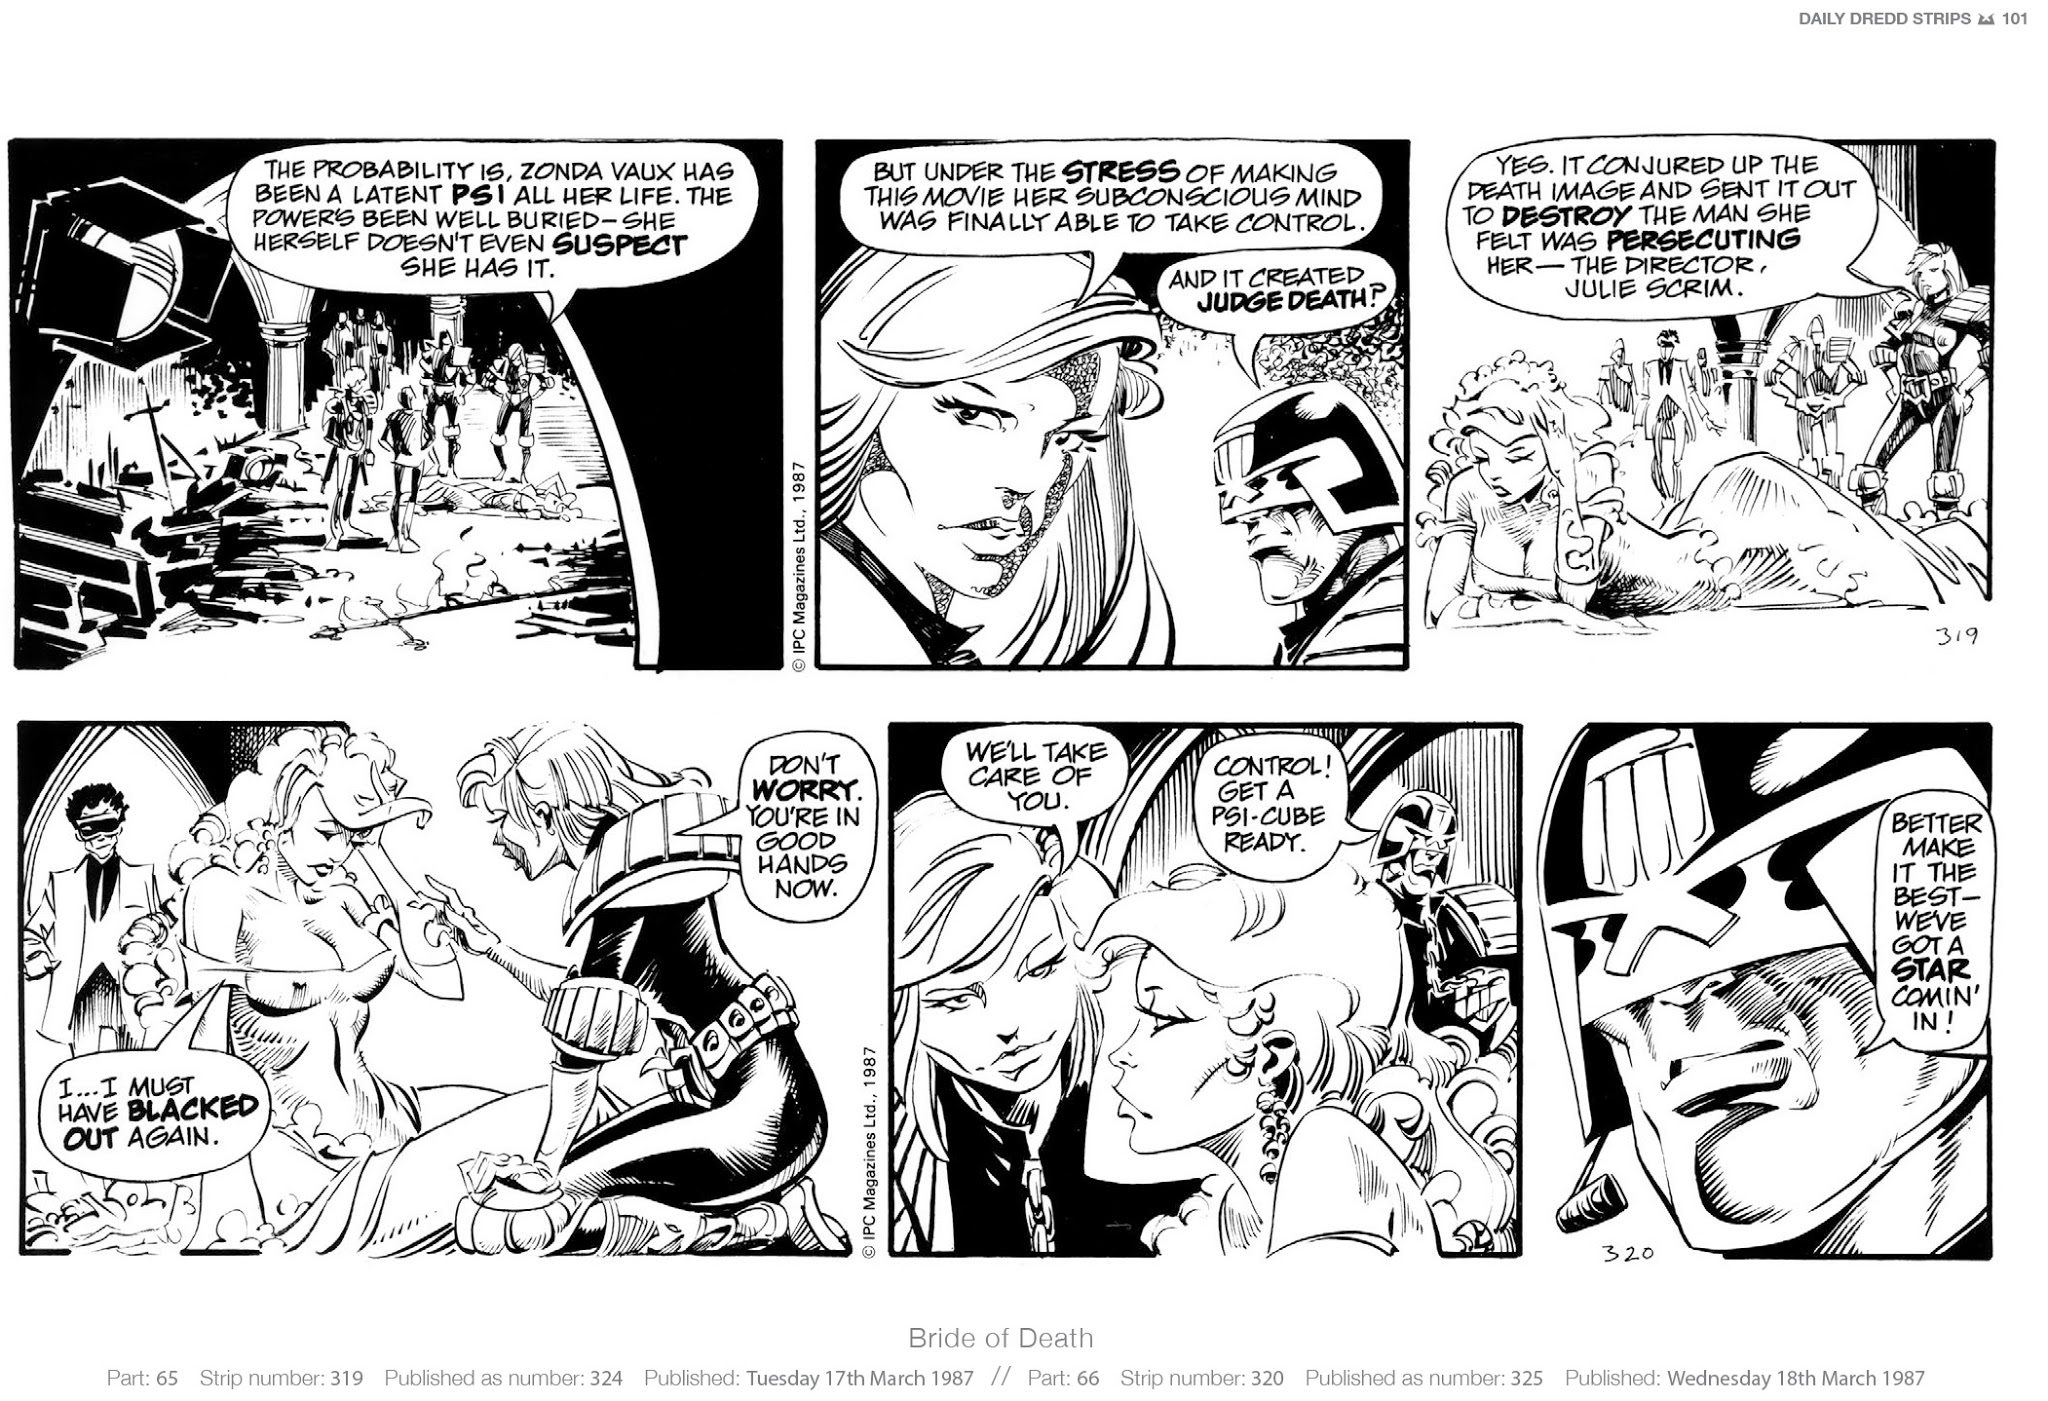 Read online Judge Dredd: The Daily Dredds comic -  Issue # TPB 2 - 104